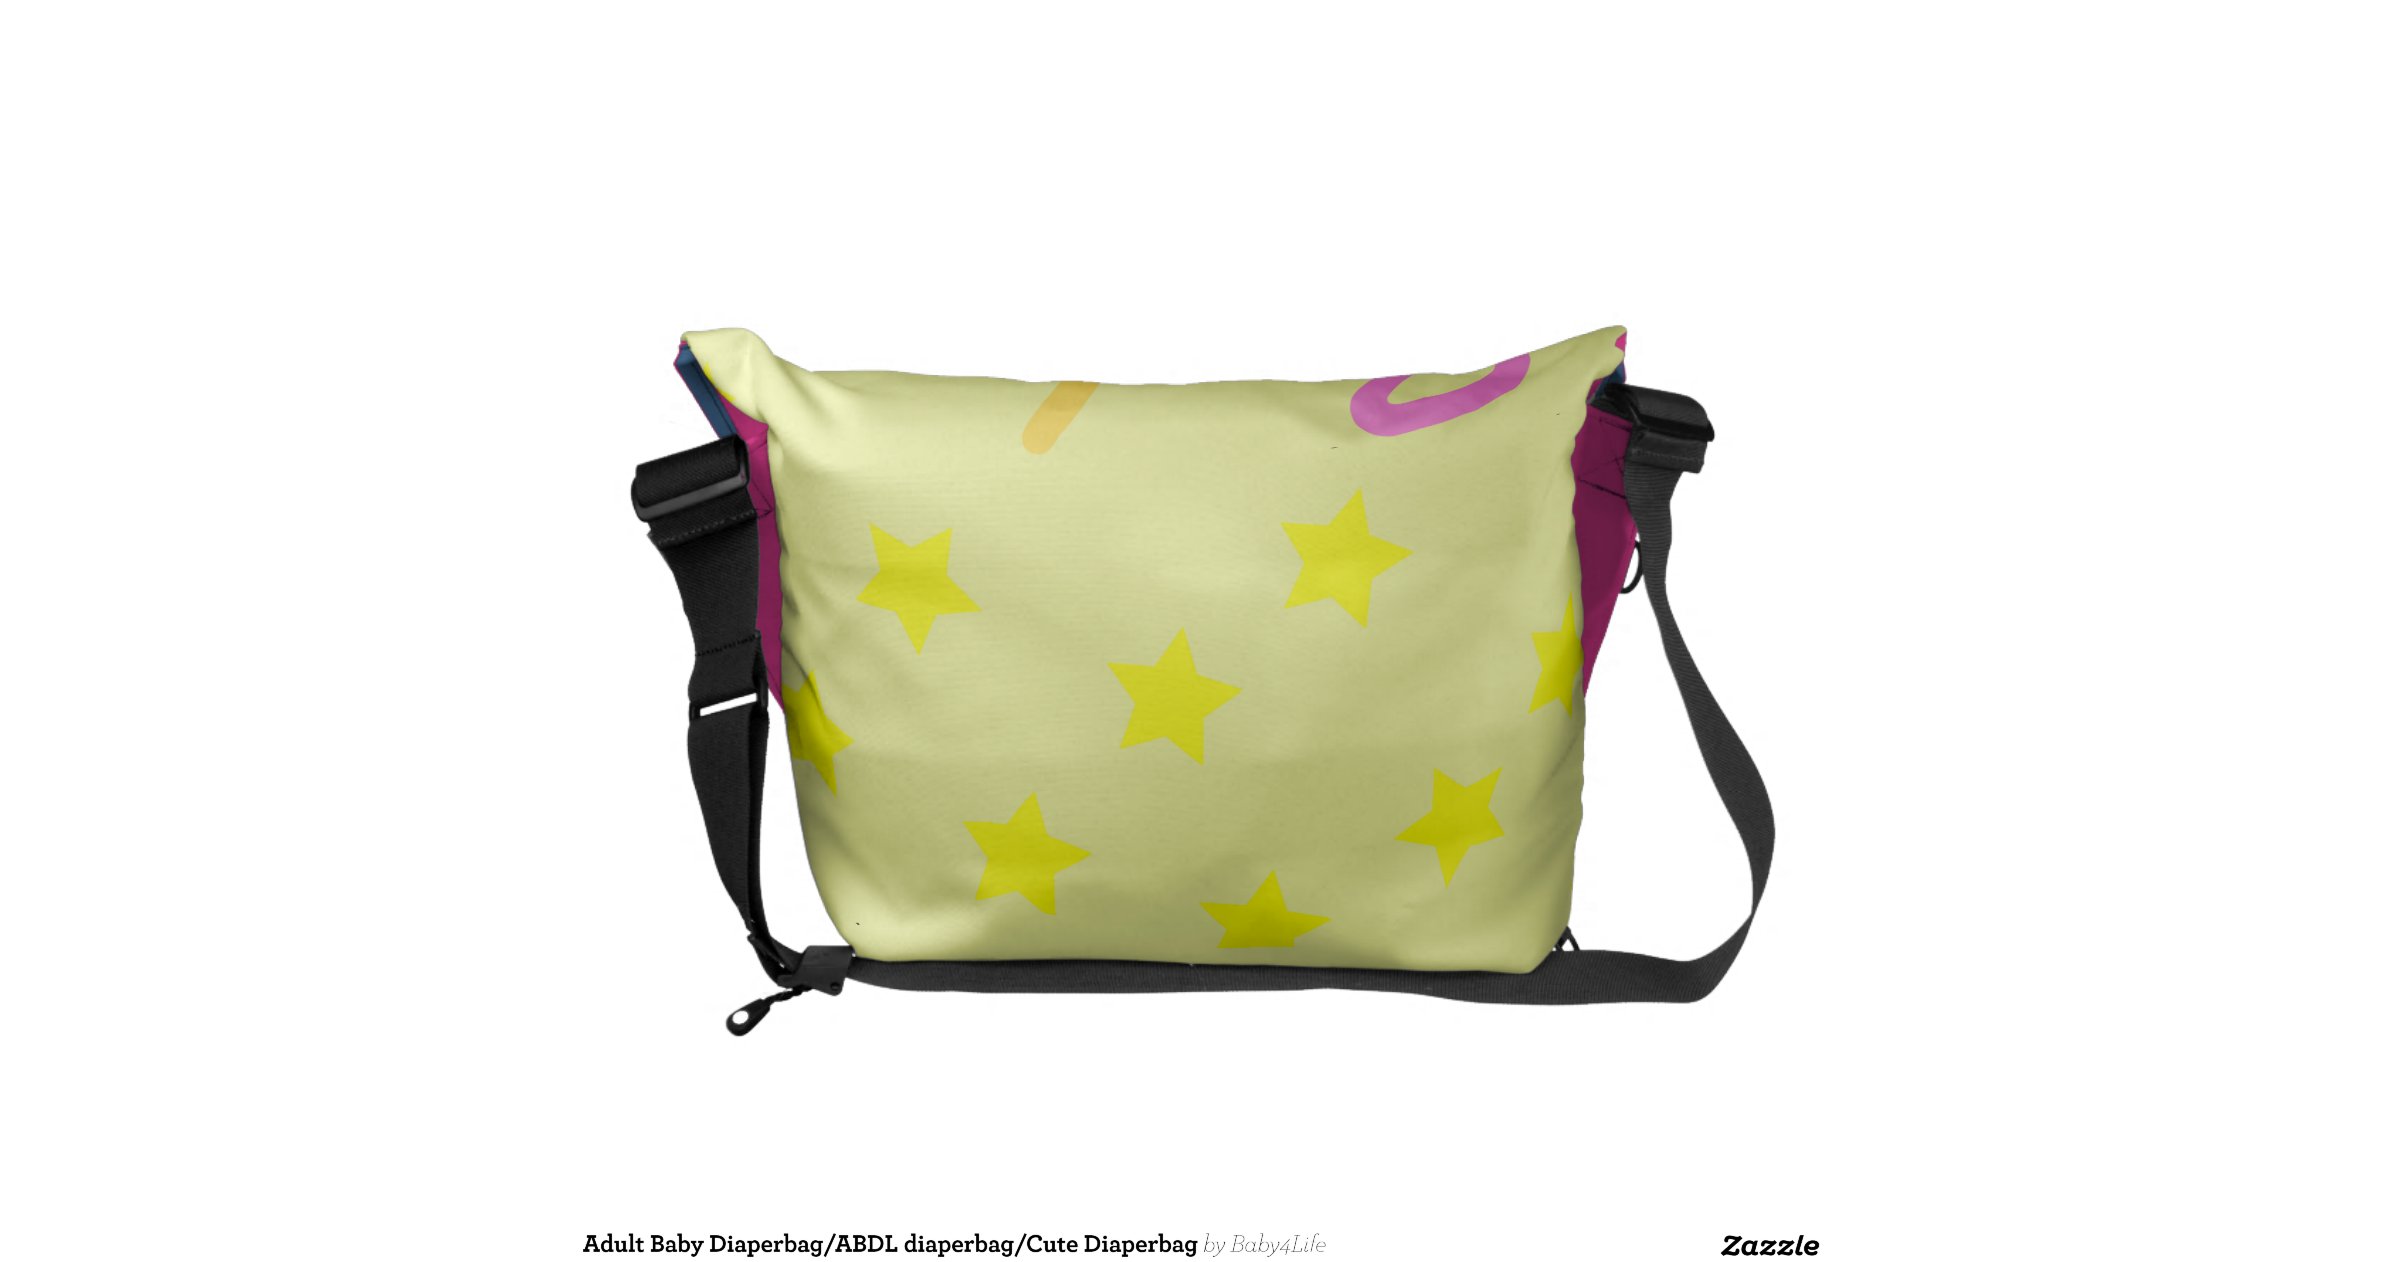 Adult Baby Diaperbag/ABDL diaperbag/Cute Diaperbag Courier Bag | Zazzle